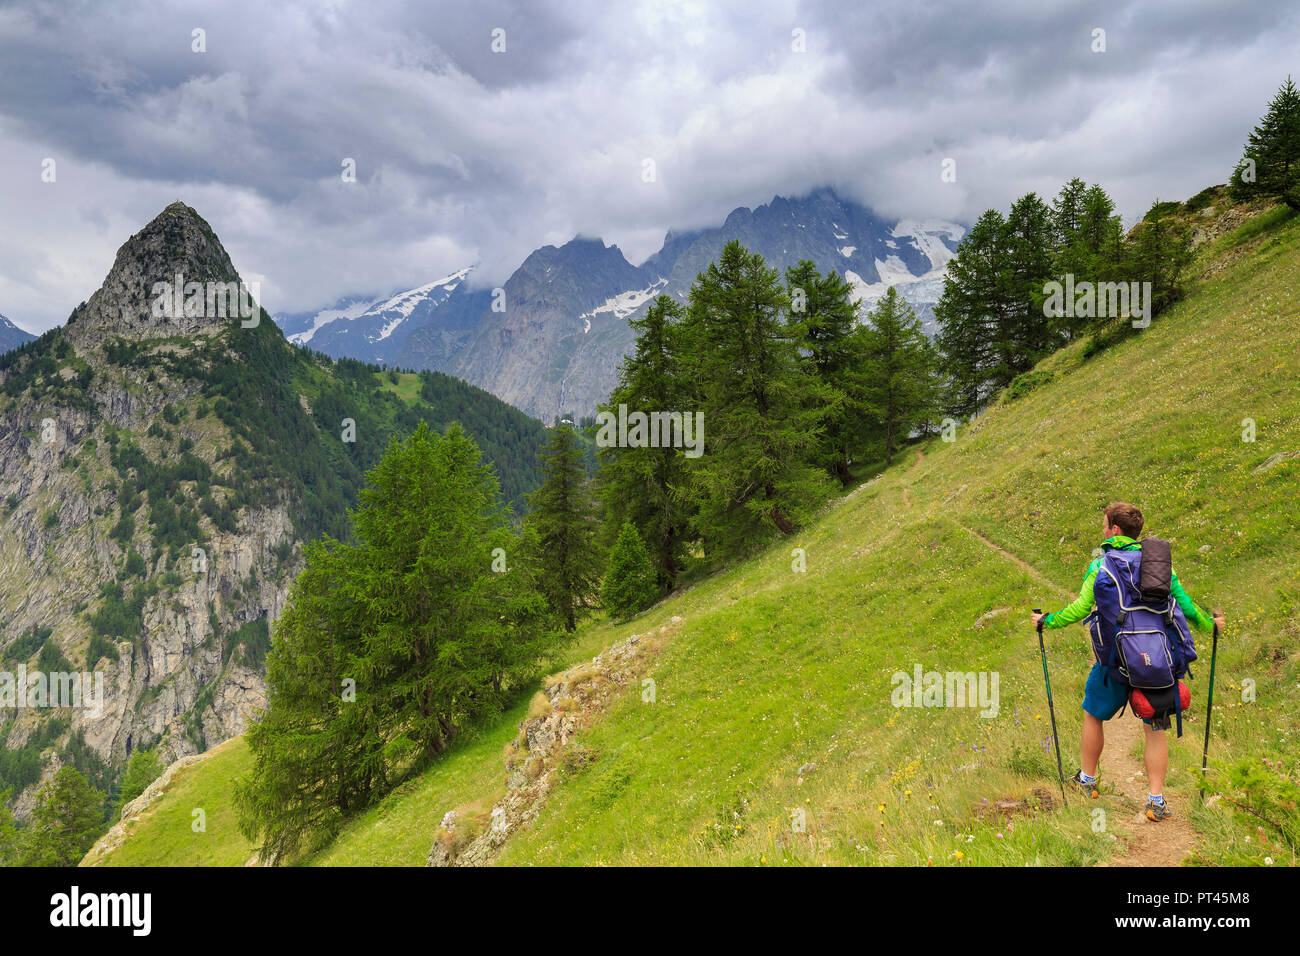 Hiker watches the threatening sky, Bertone Hut, Ferret Valley, Courmayeur, Aosta Valley, Italy, Europe Stock Photo